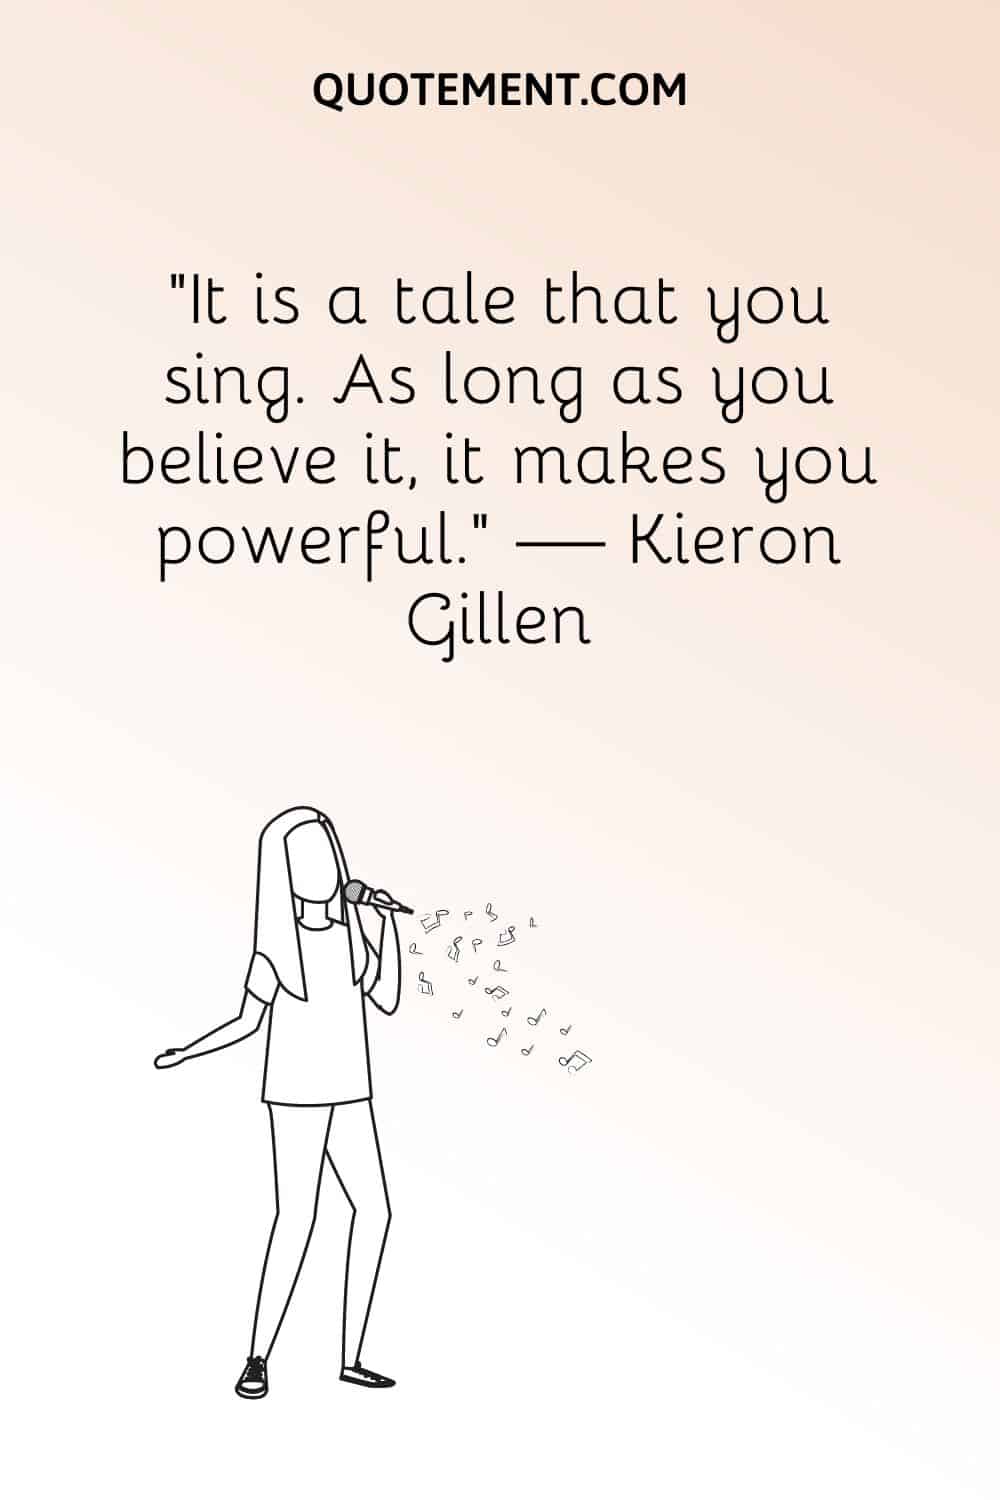 “It is a tale that you sing. As long as you believe it, it makes you powerful.” — Kieron Gillen